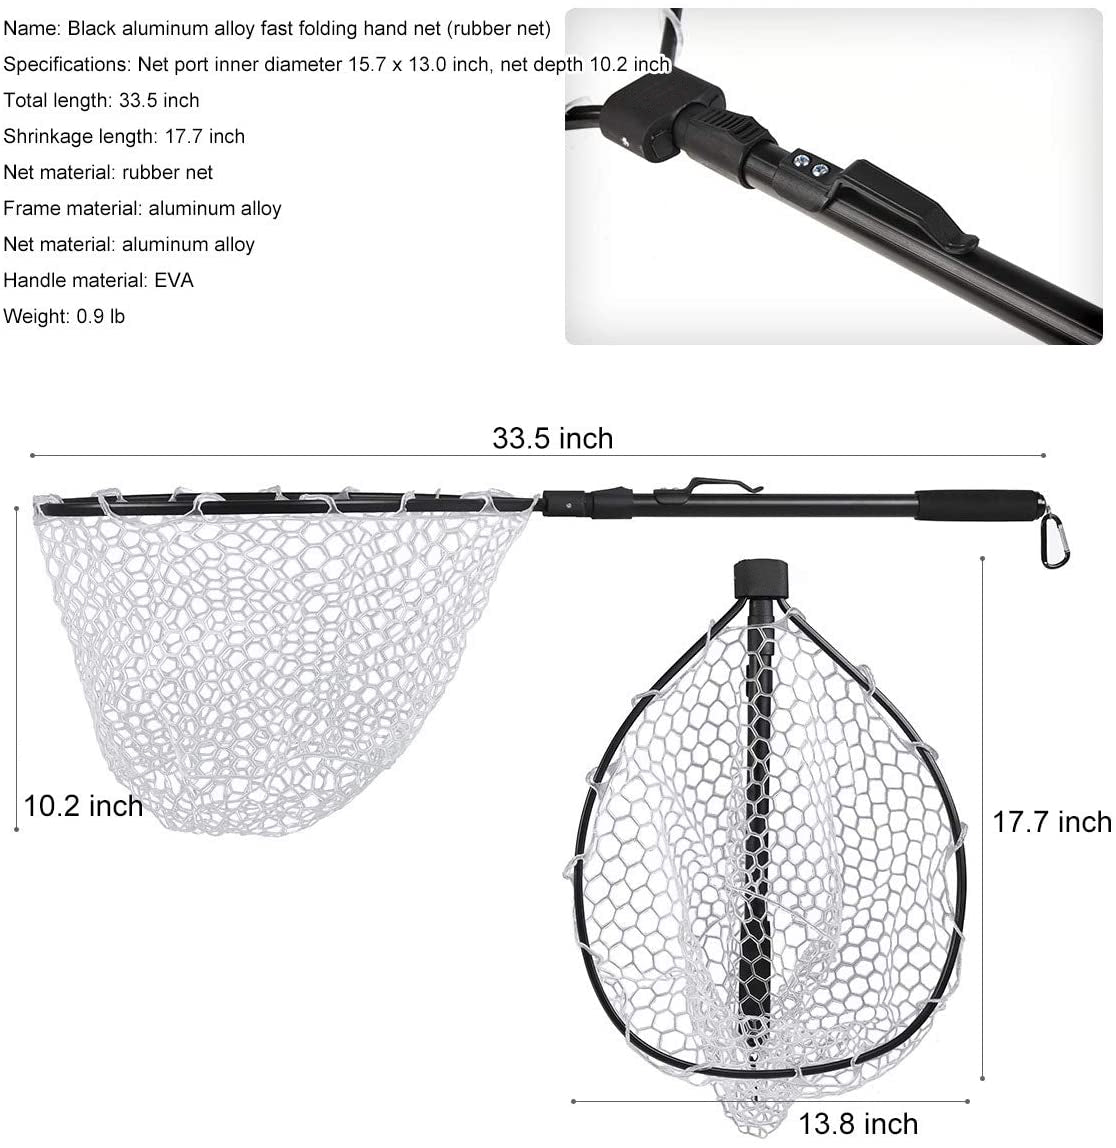 Aluminum Alloy Pole fold Rubber Fishing Net for Fly Fishing